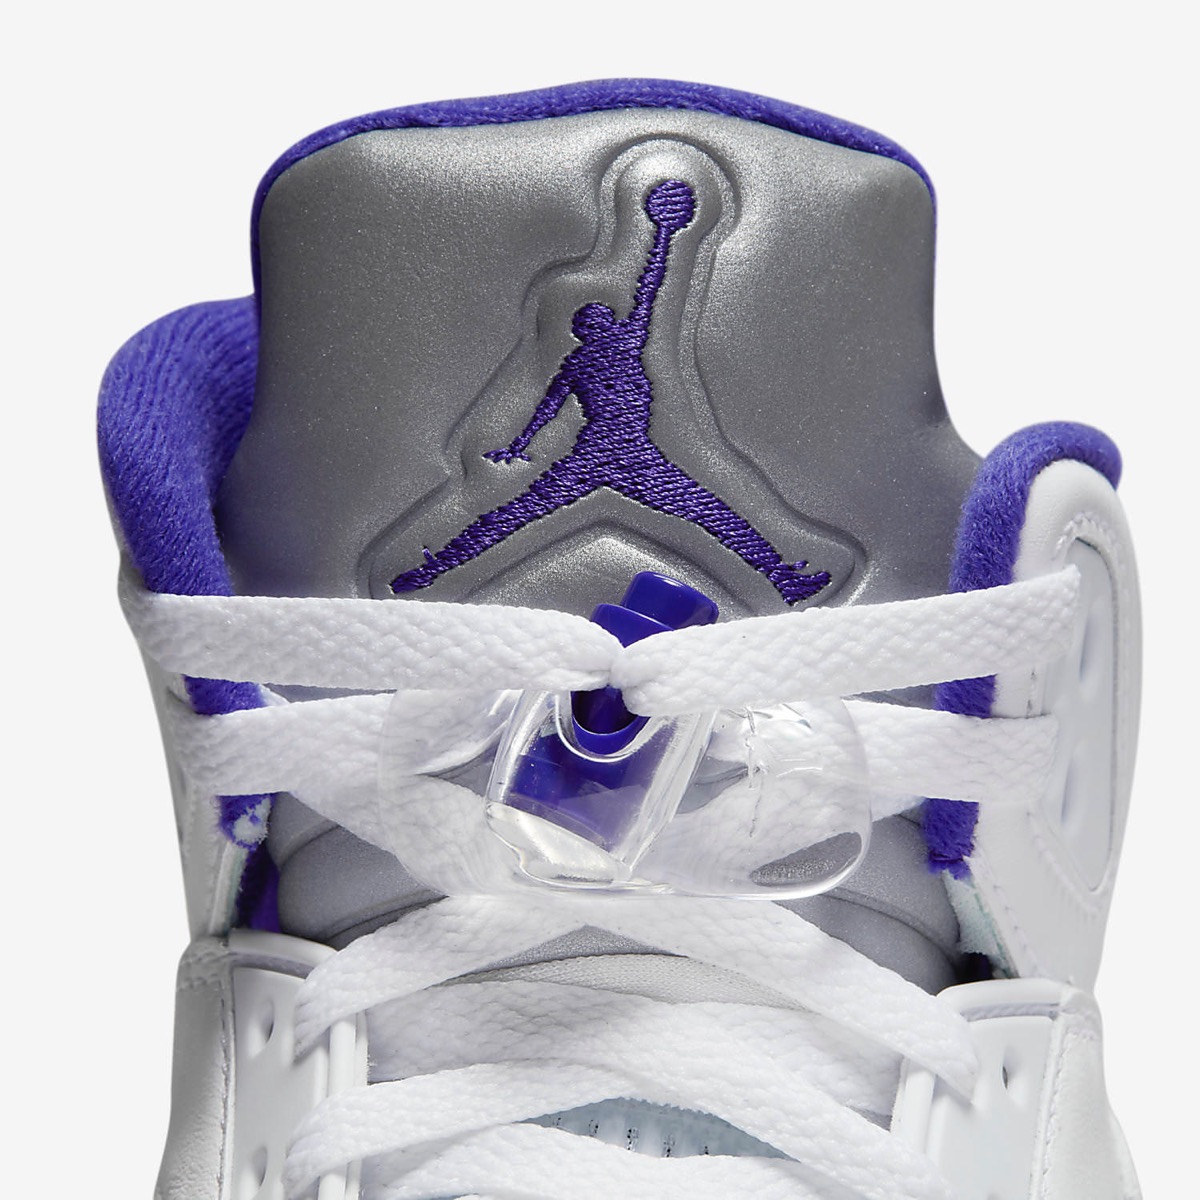 Nike】Air Jordan 5 Retro “Dark Concord”が国内8月16日に発売予定 ...